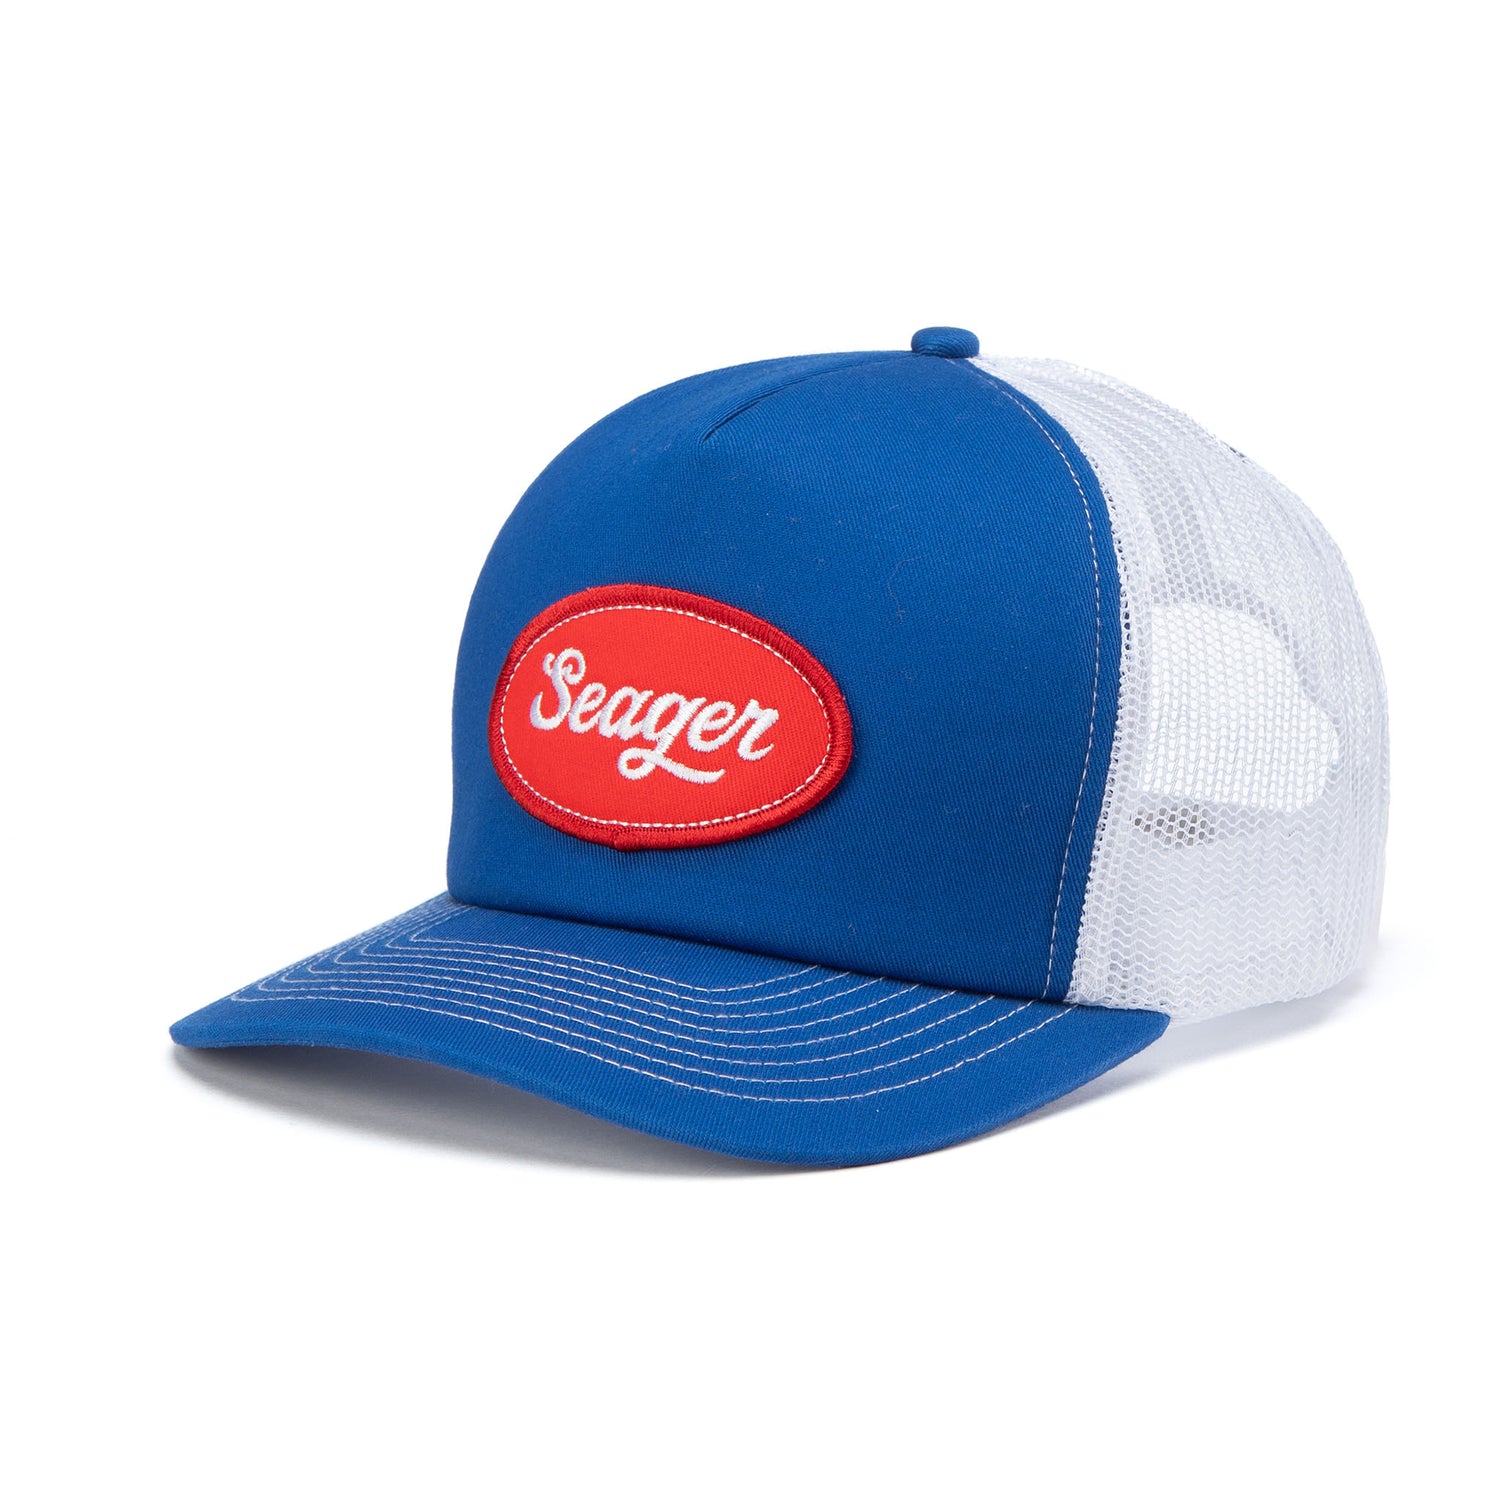 SNAPBACKS | Seager Co.